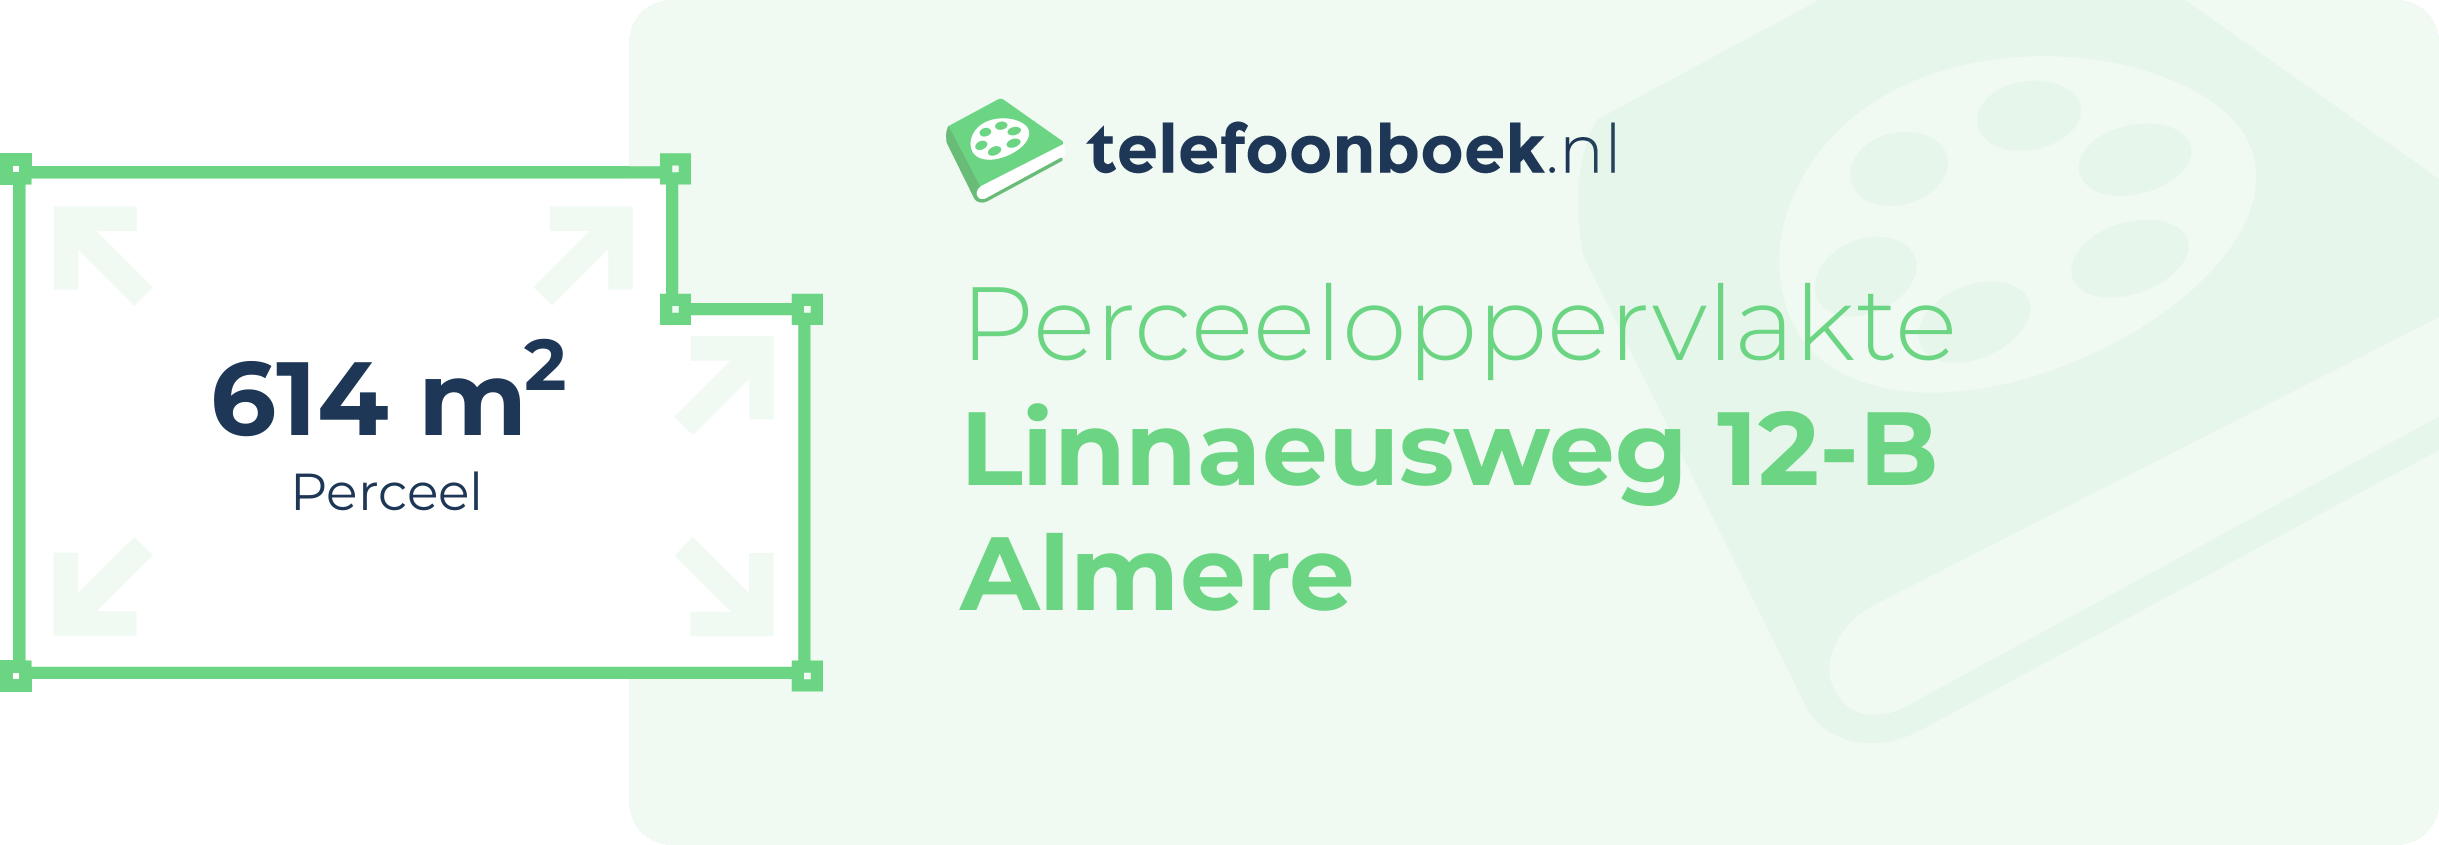 Perceeloppervlakte Linnaeusweg 12-B Almere